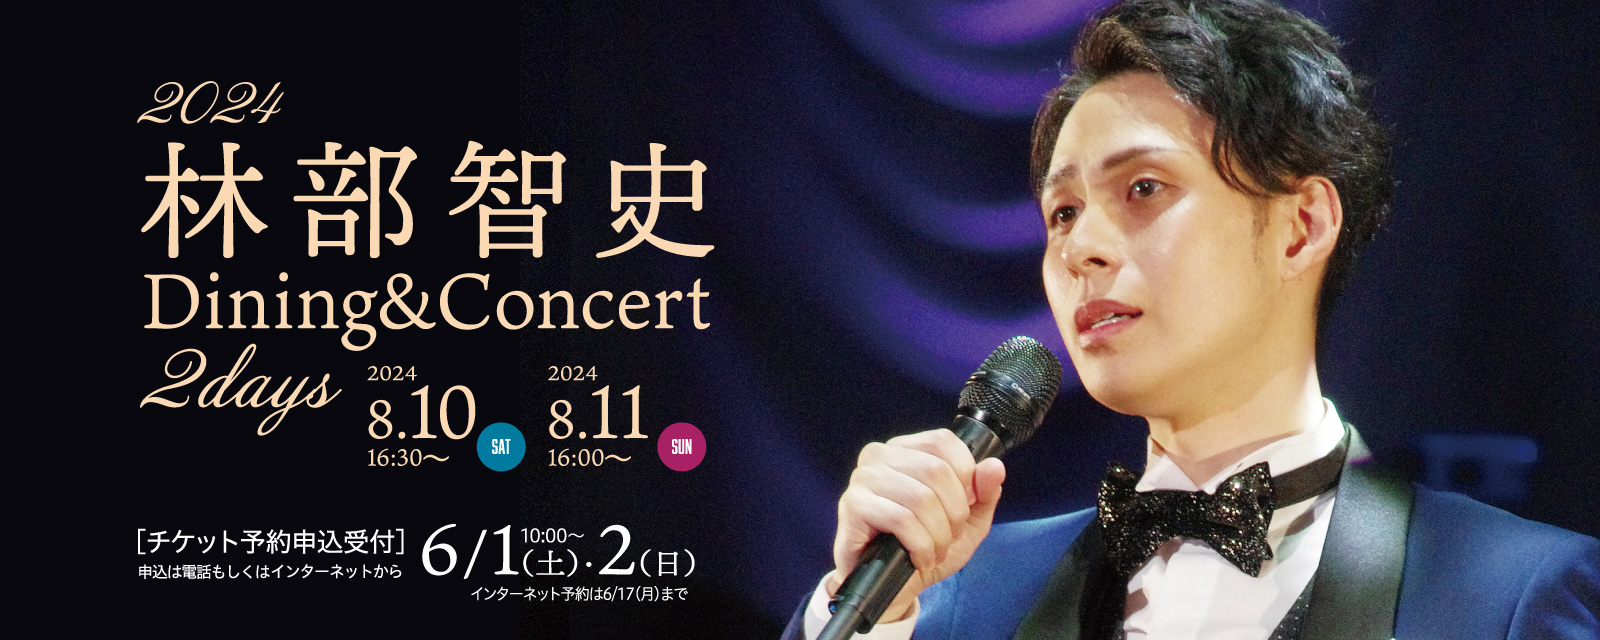 2024 ѕqj Dining & Concert 2day